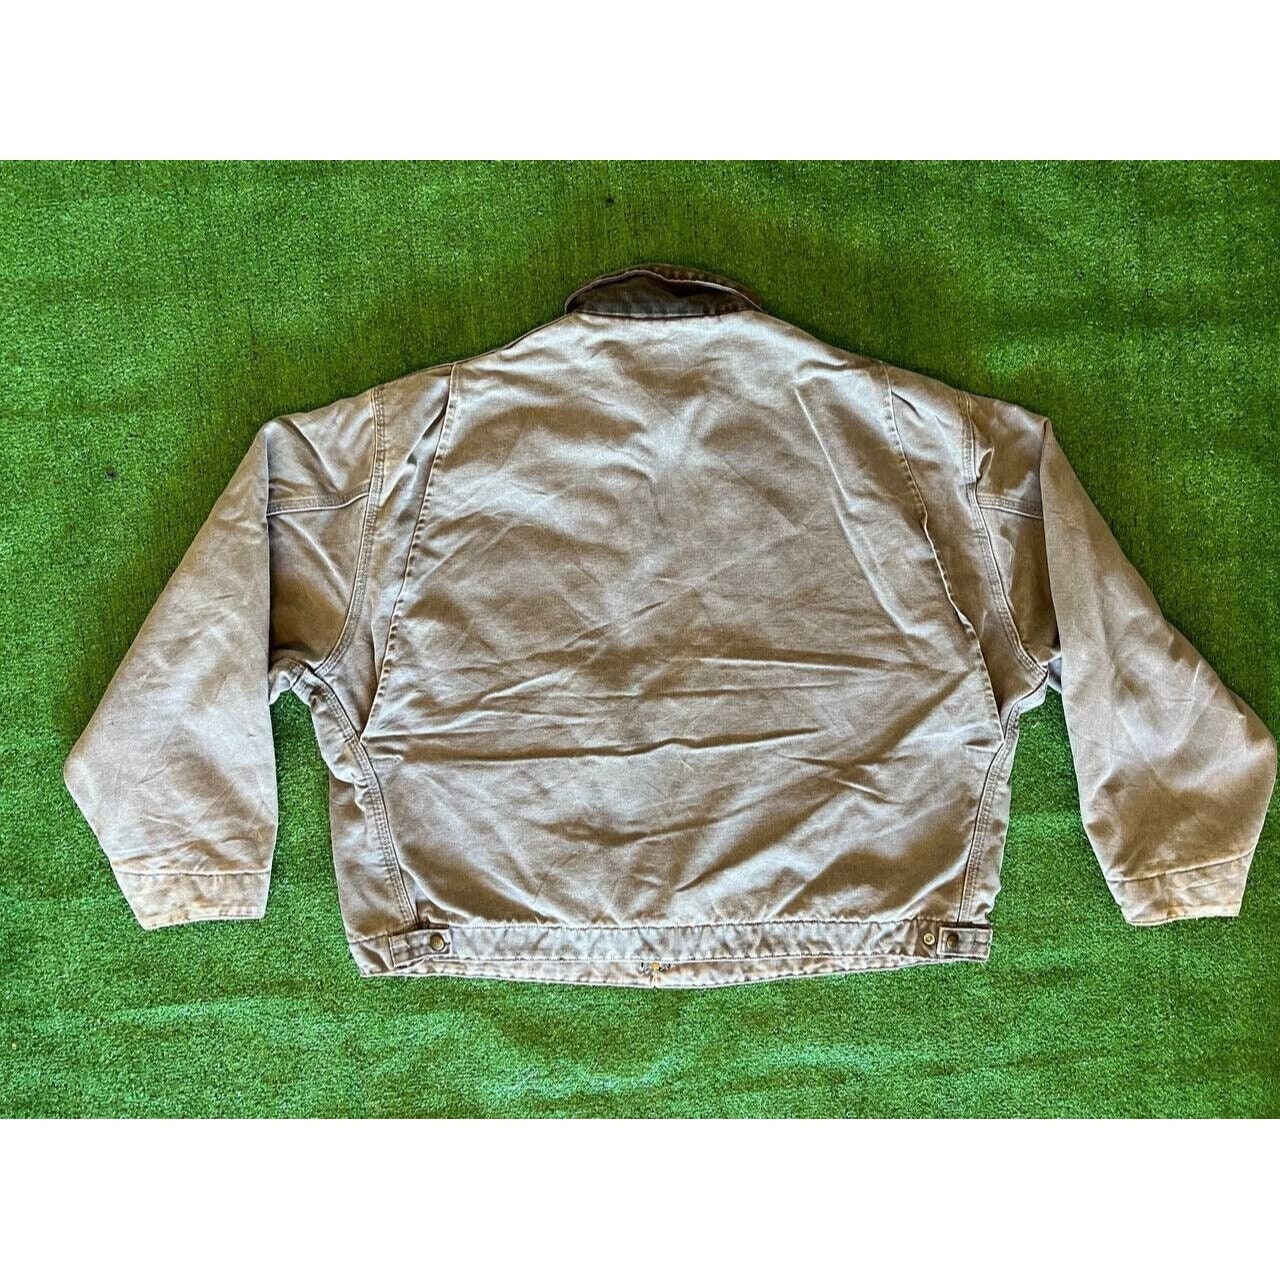 Carhartt detroit jacket size - Gem